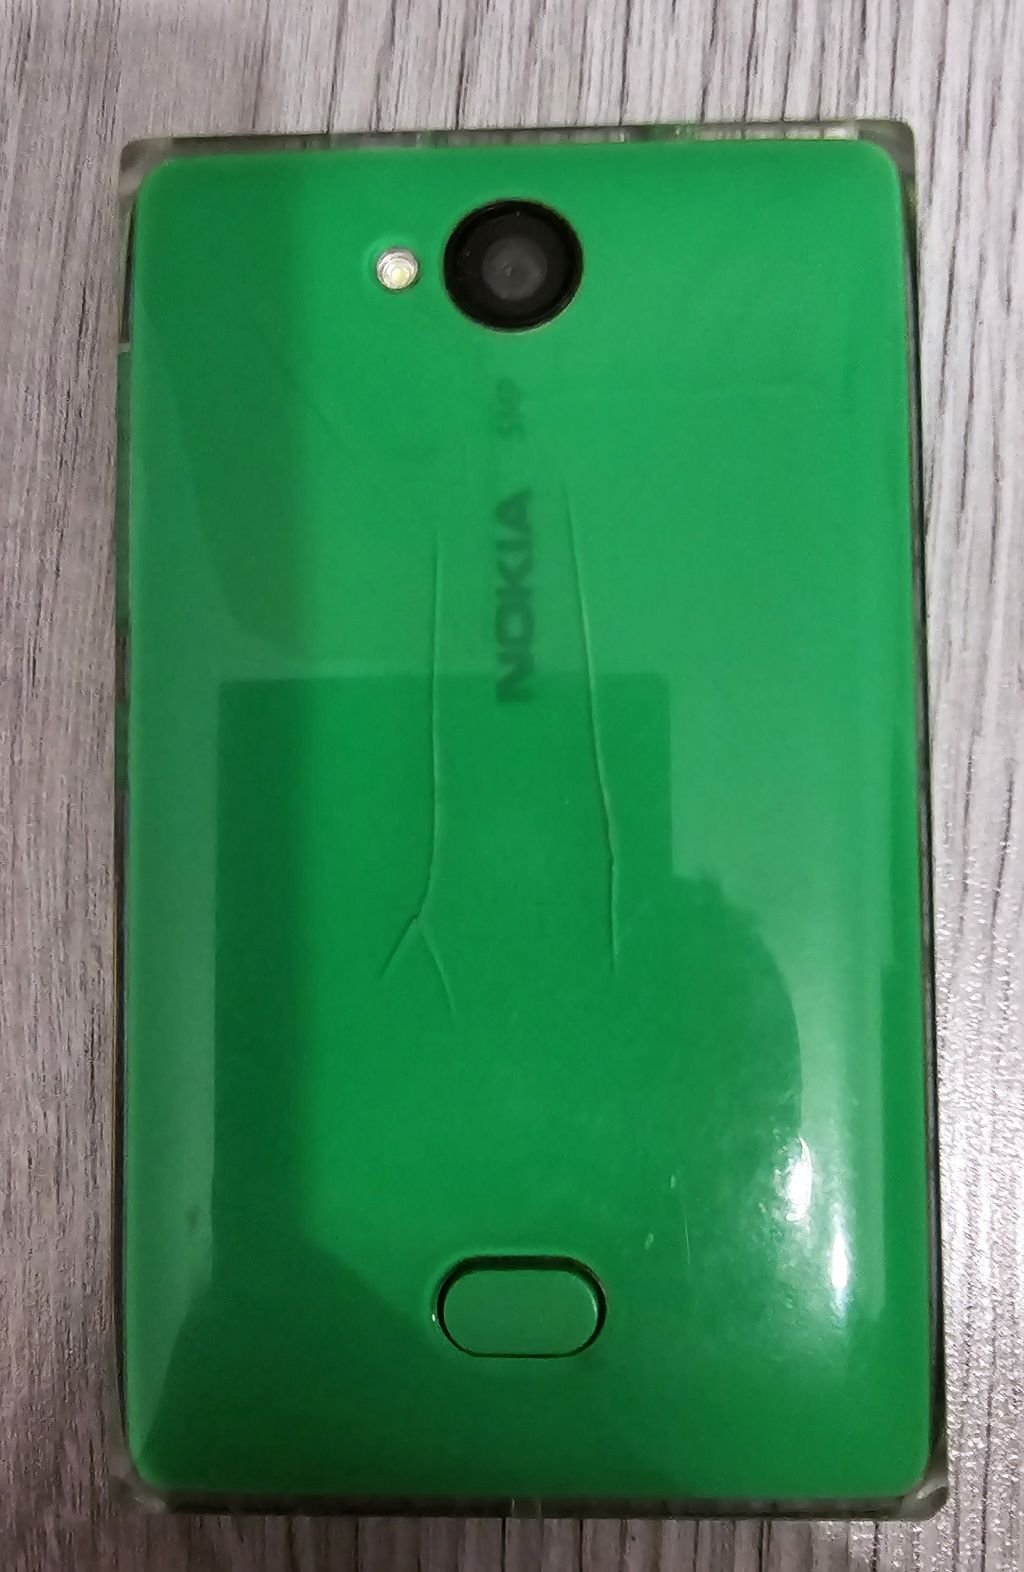 Nokia Asha 500 single sim